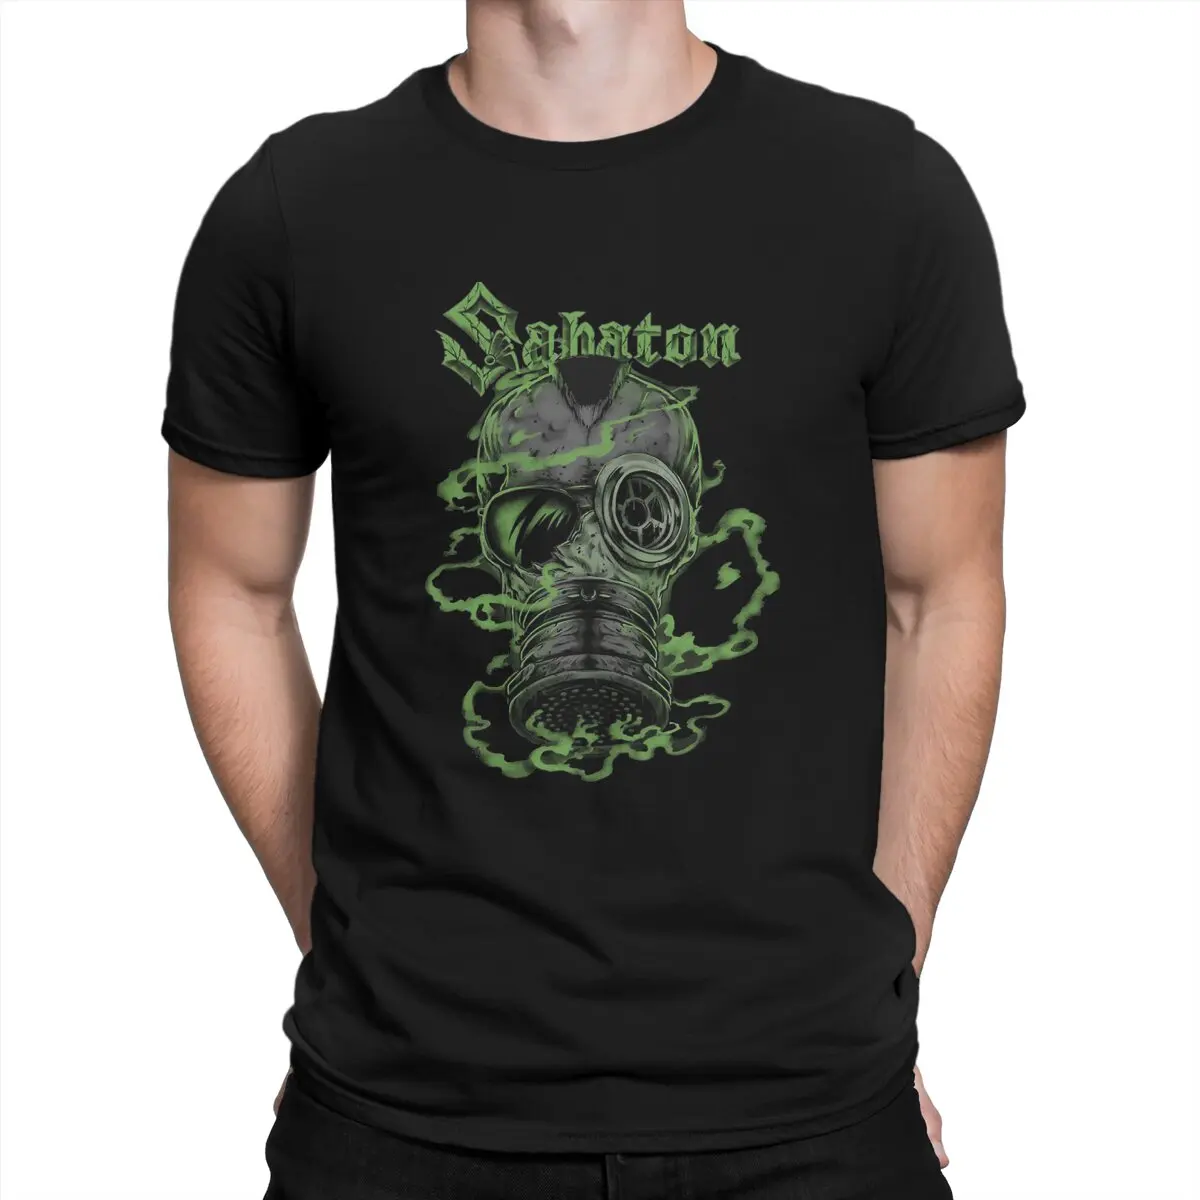 Men T-Shirt Heavy Metal Music Funny Cotton Tees Short Sleeve S-SABATON T Shirts Crew Neck Clothing Gift